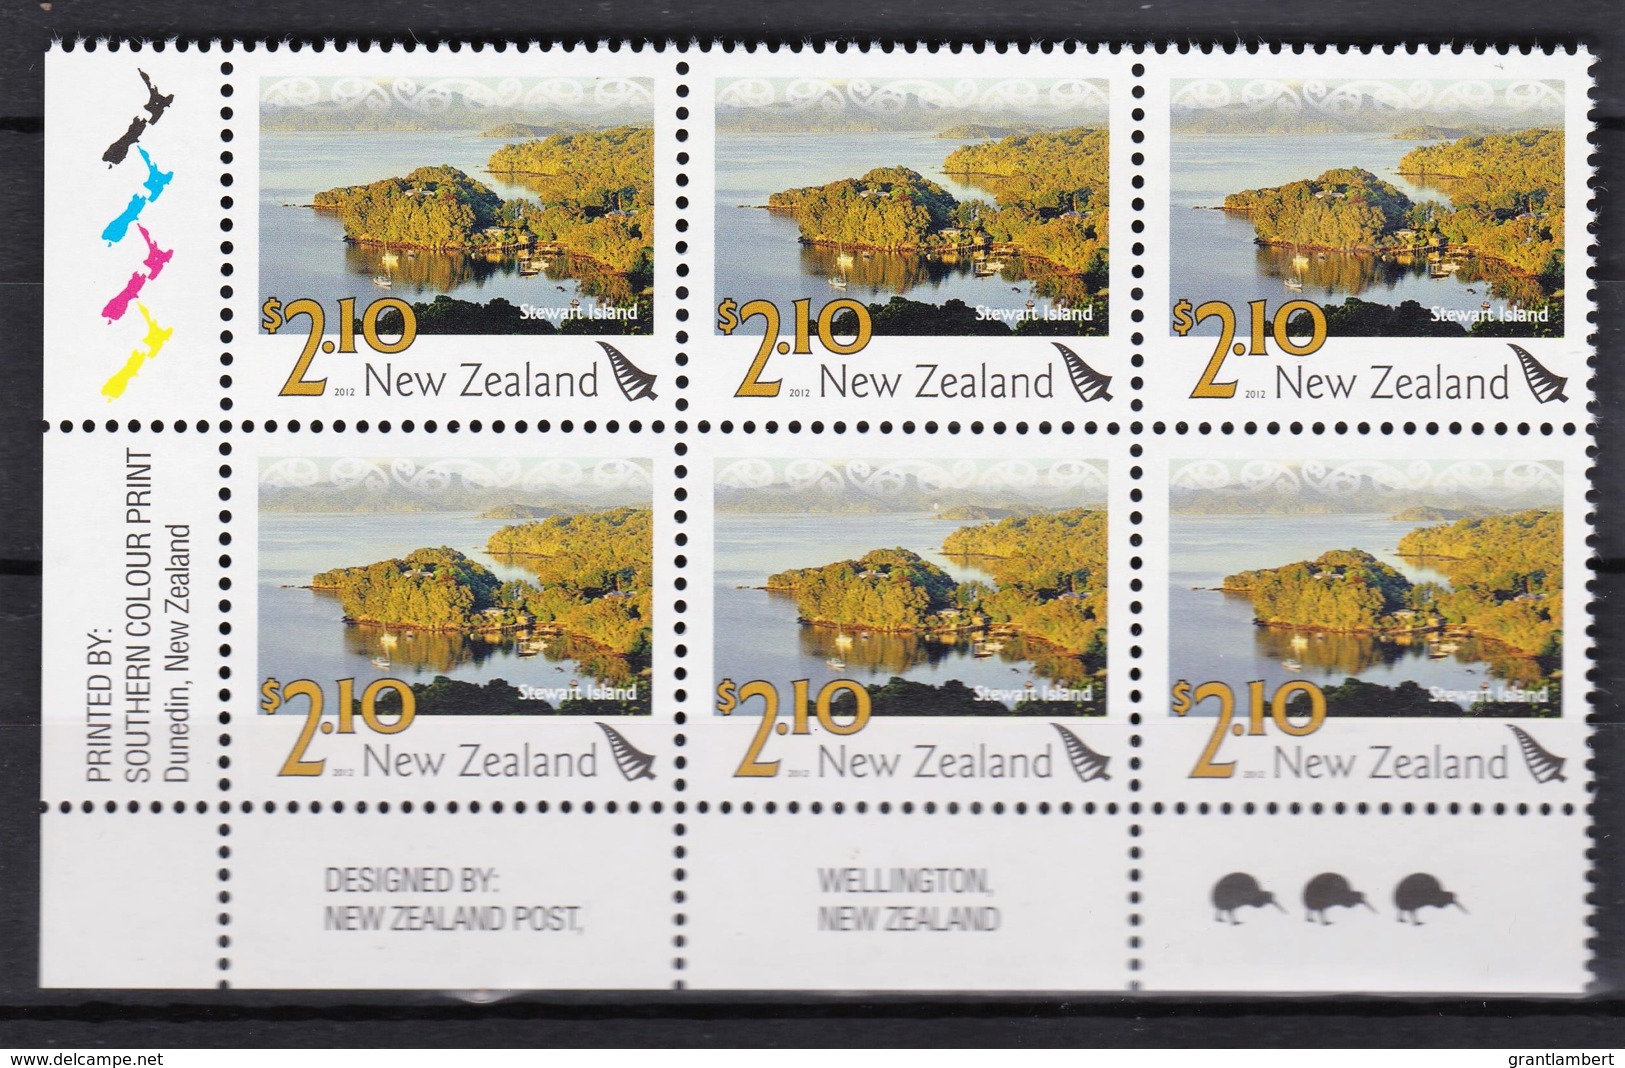 New Zealand 2012 Scenic $2.10 Stewart Island Control Block MNH, 3 Kiwis - Unused Stamps